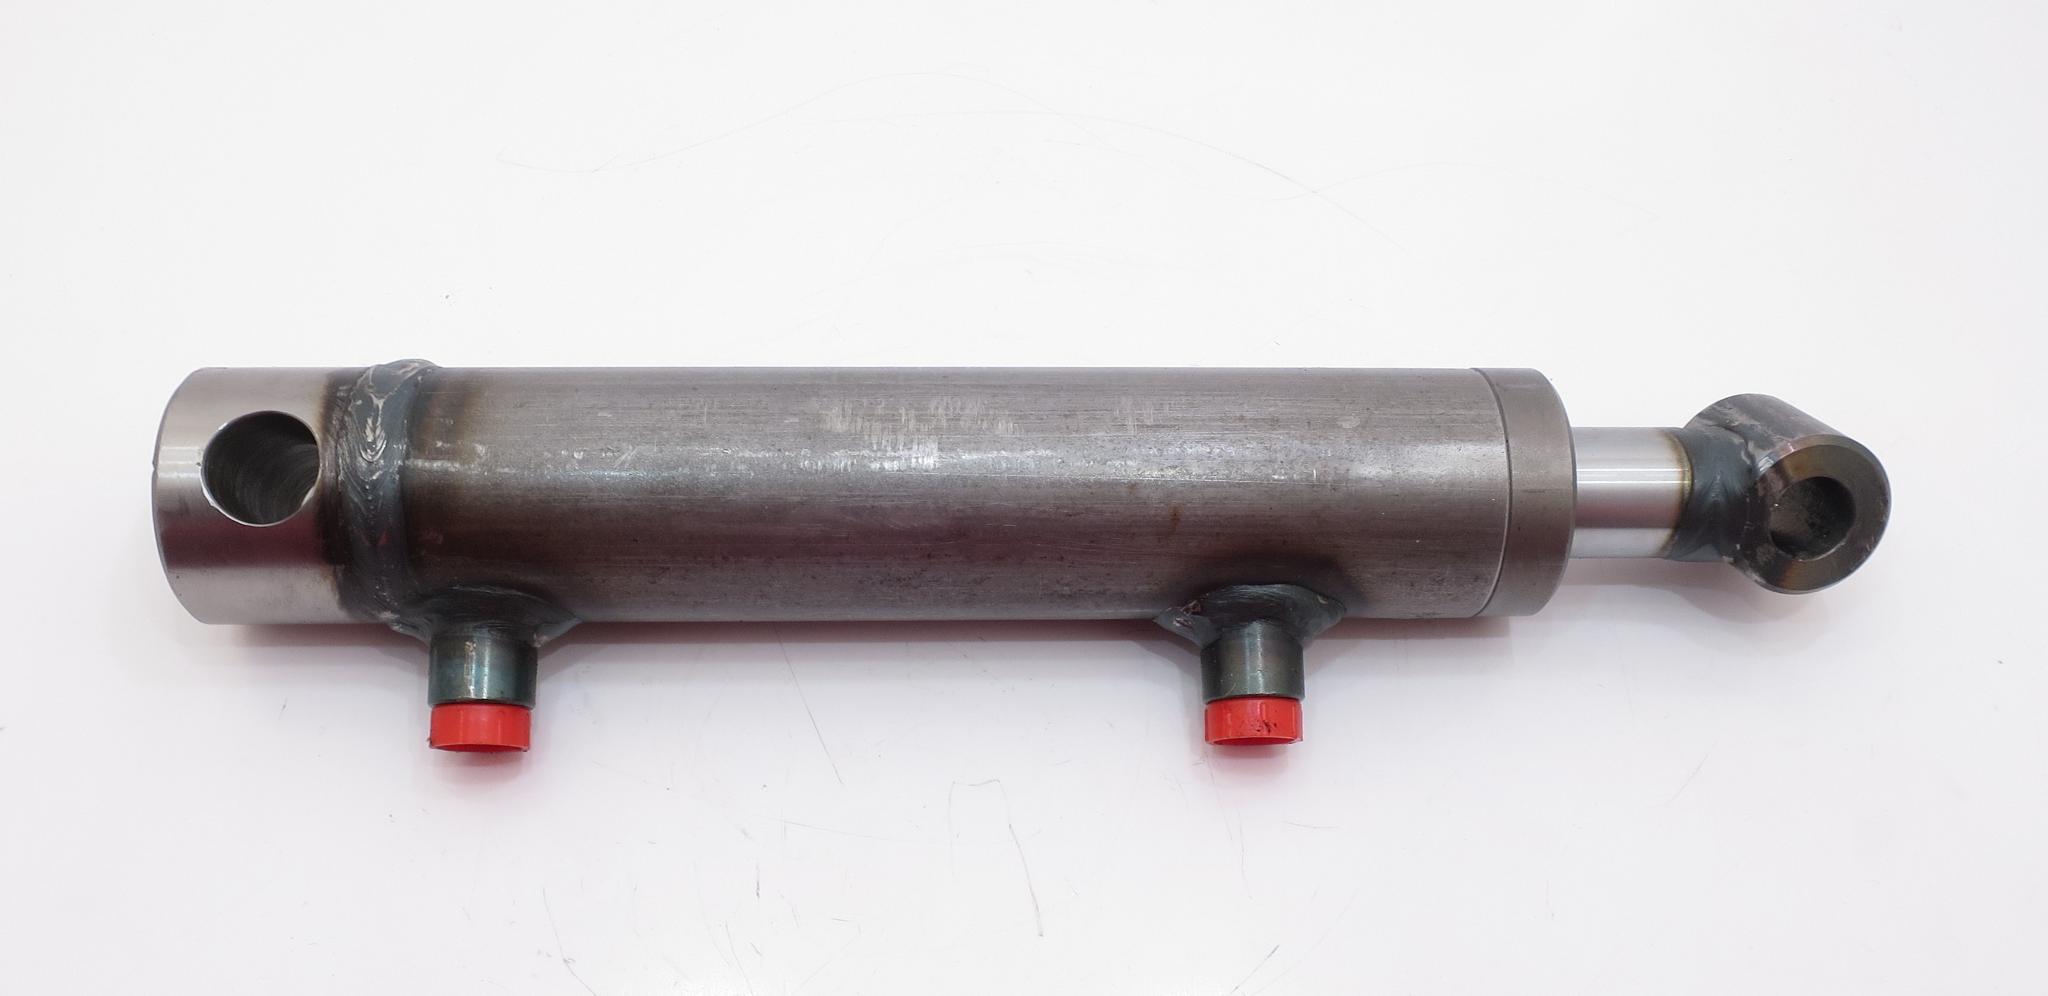 How Does a Hydraulic Cylinder Work?